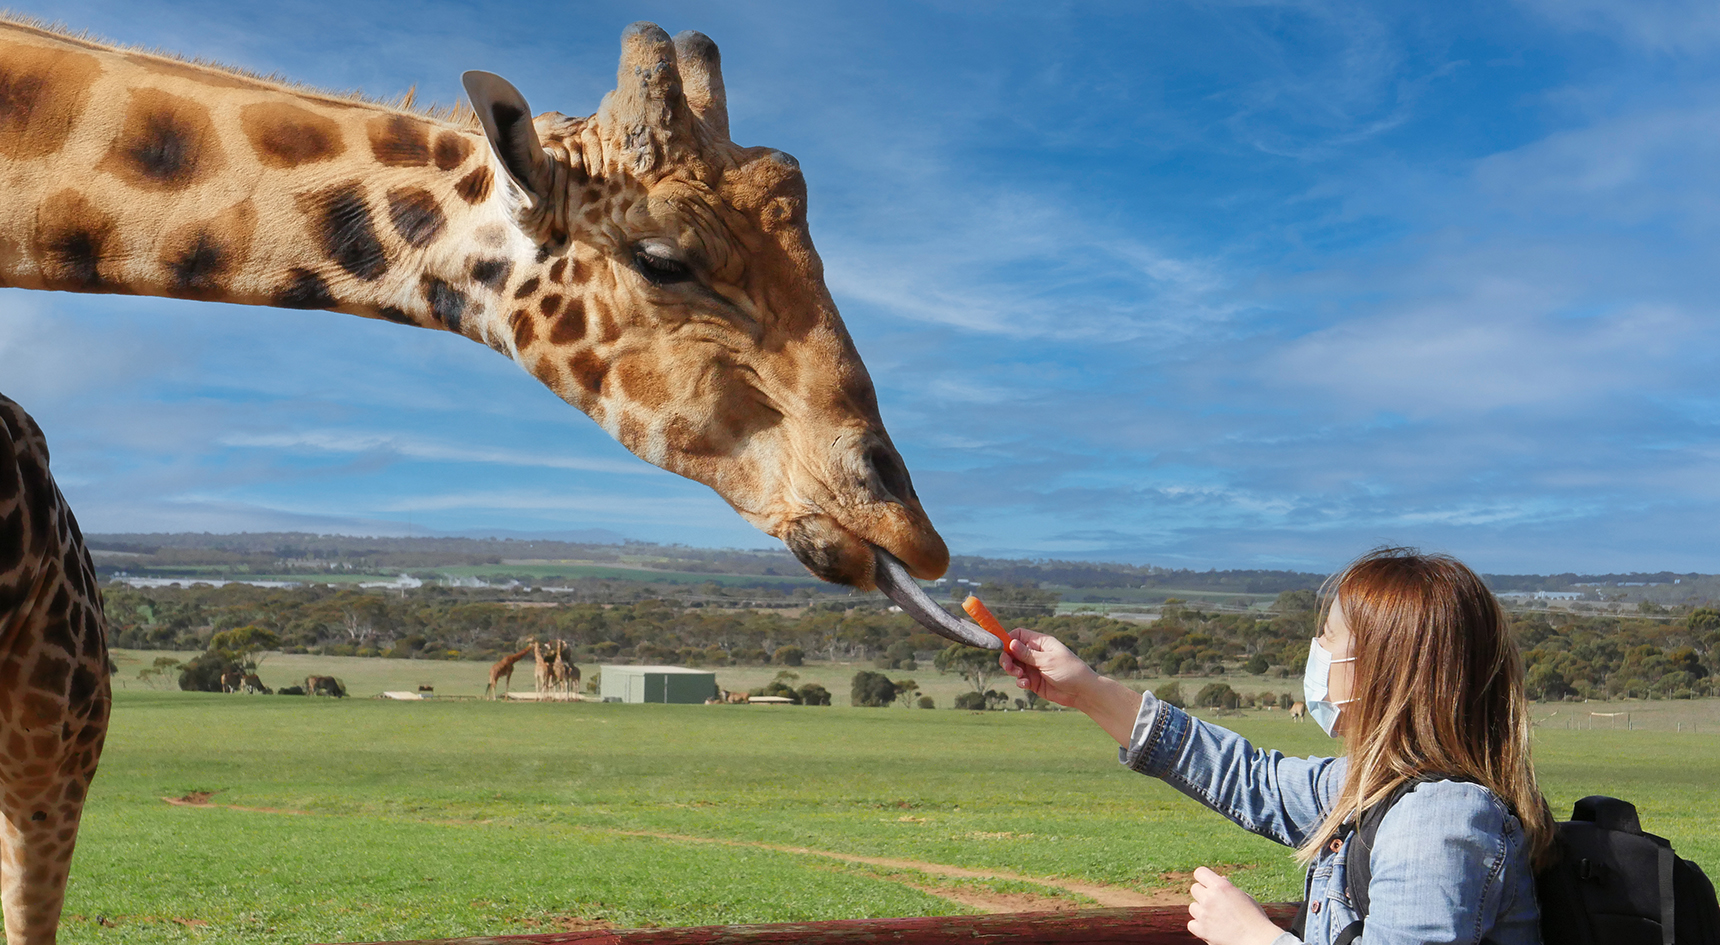 Feeding the giraffes at Monarto Safari Park in the Mid Murray region near Coorong National Park